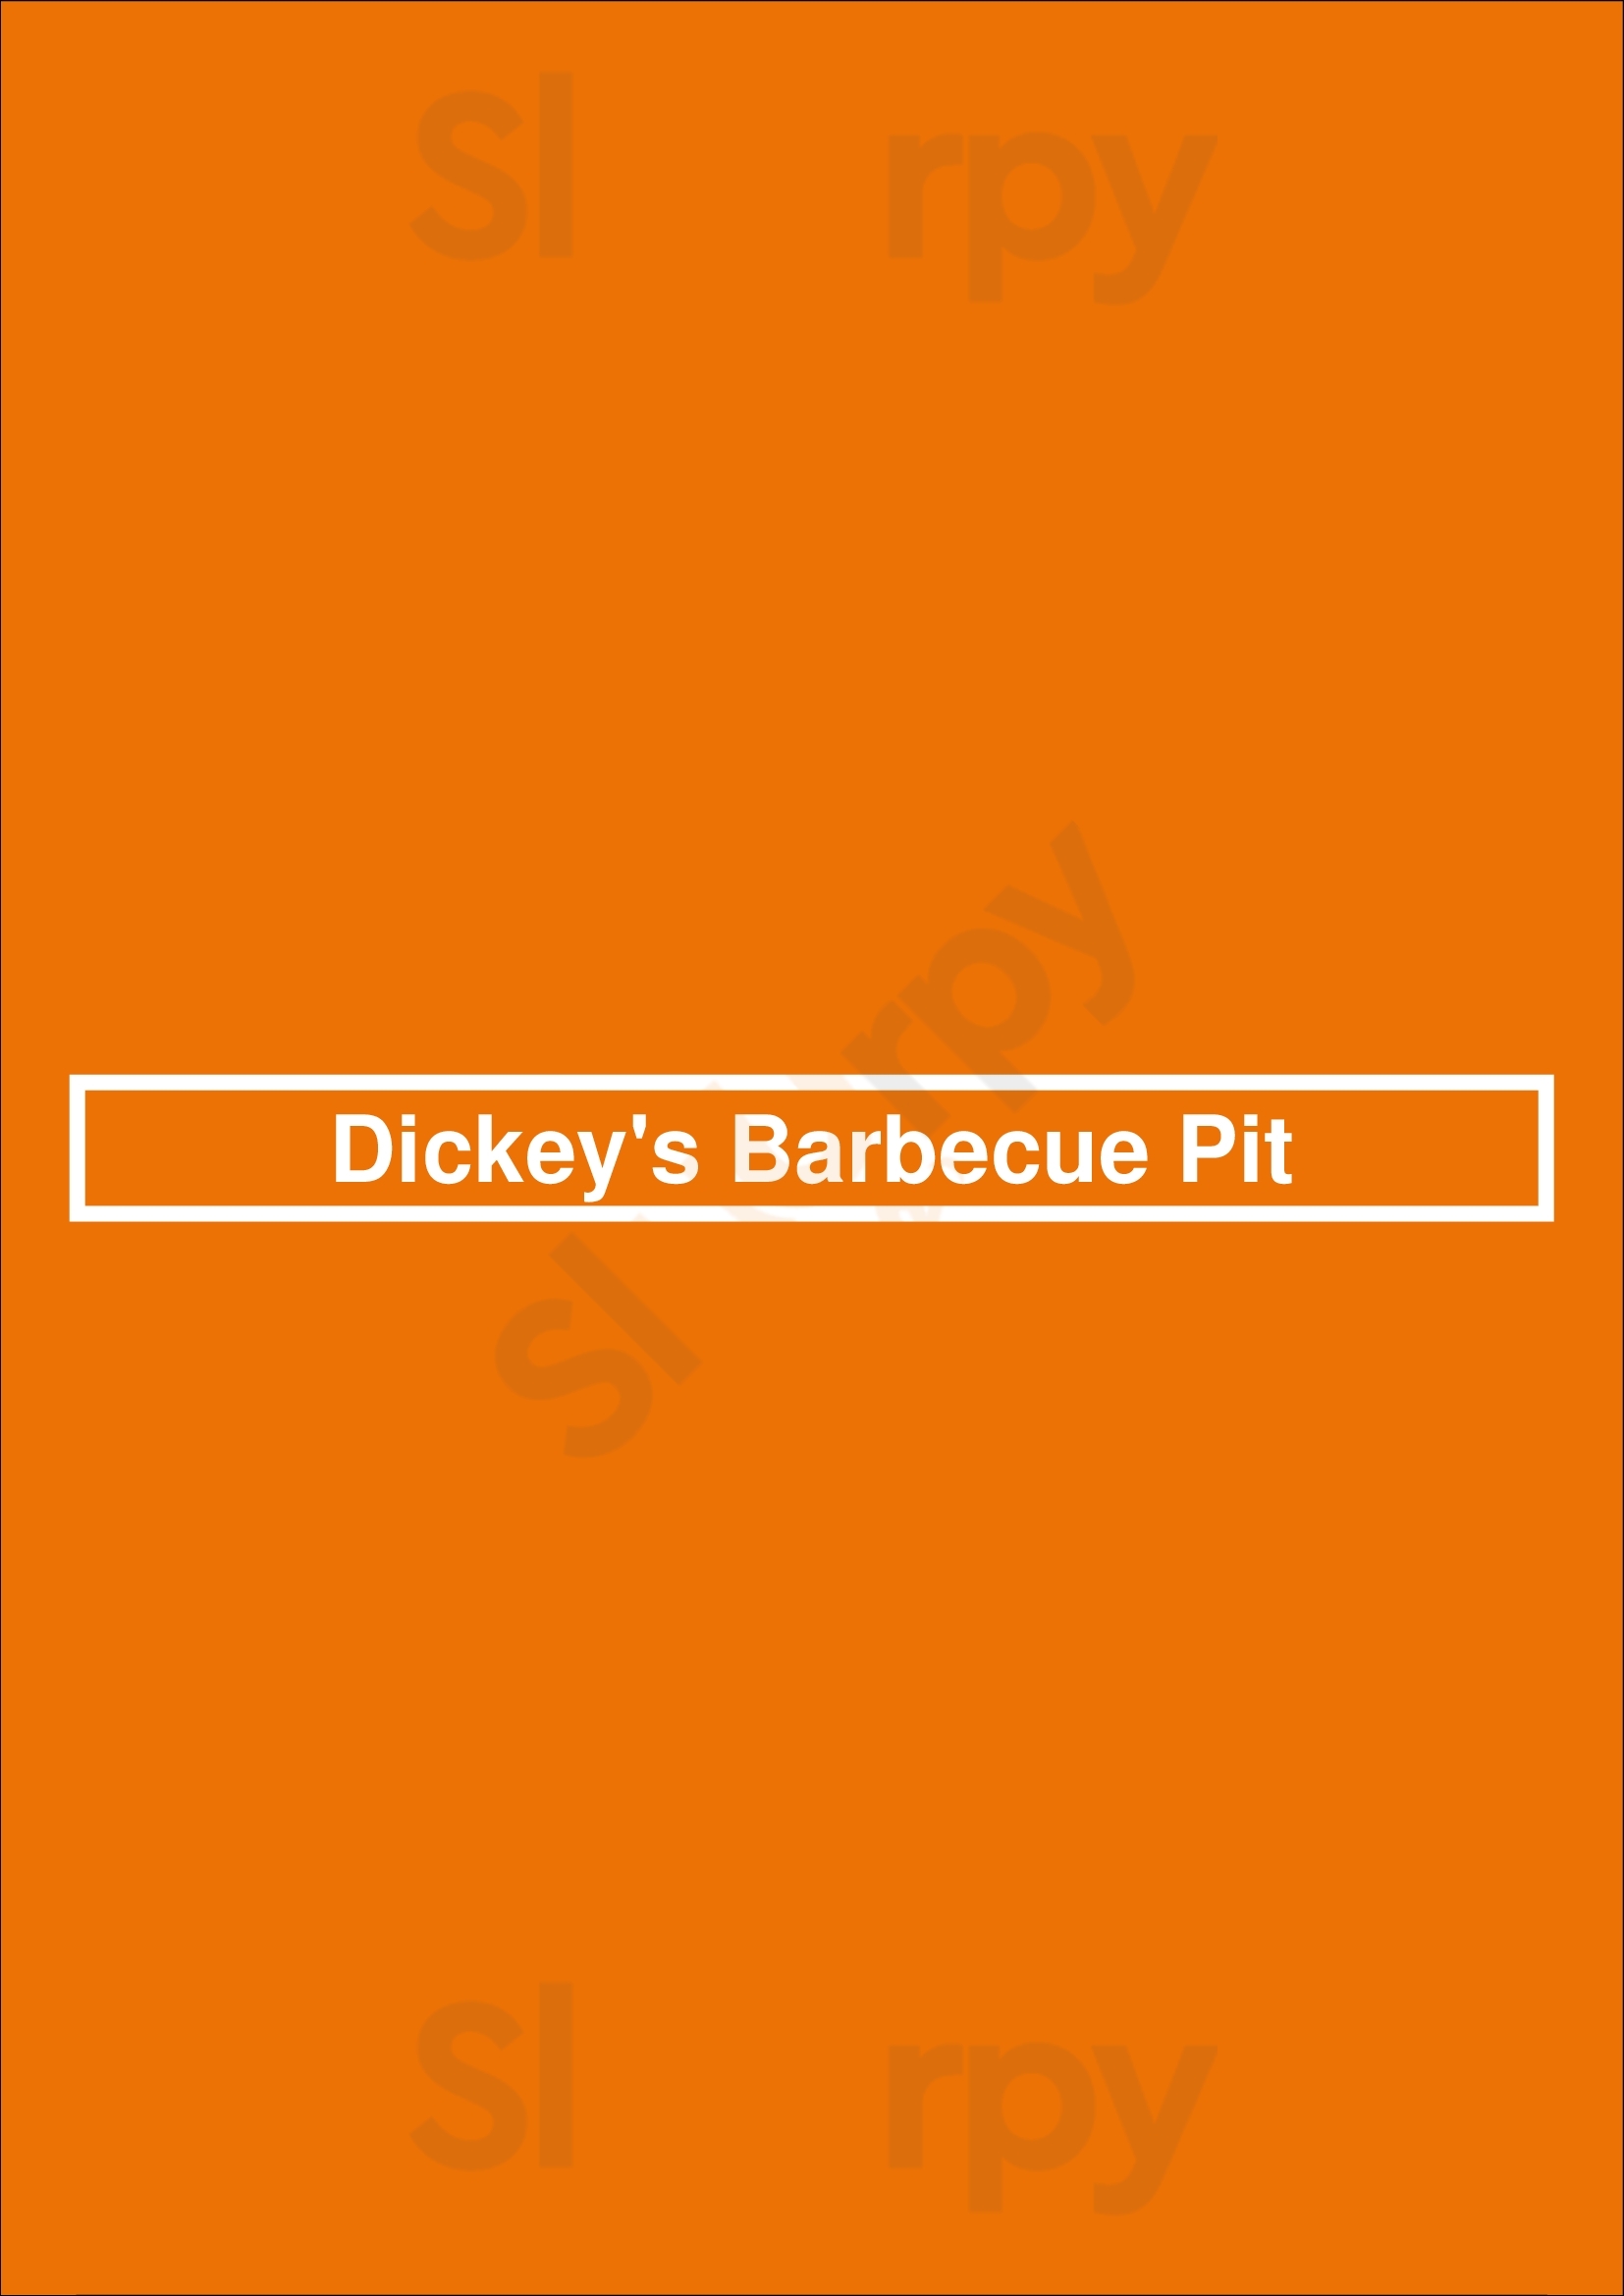 Dickey's Barbecue Pit Spokane Menu - 1